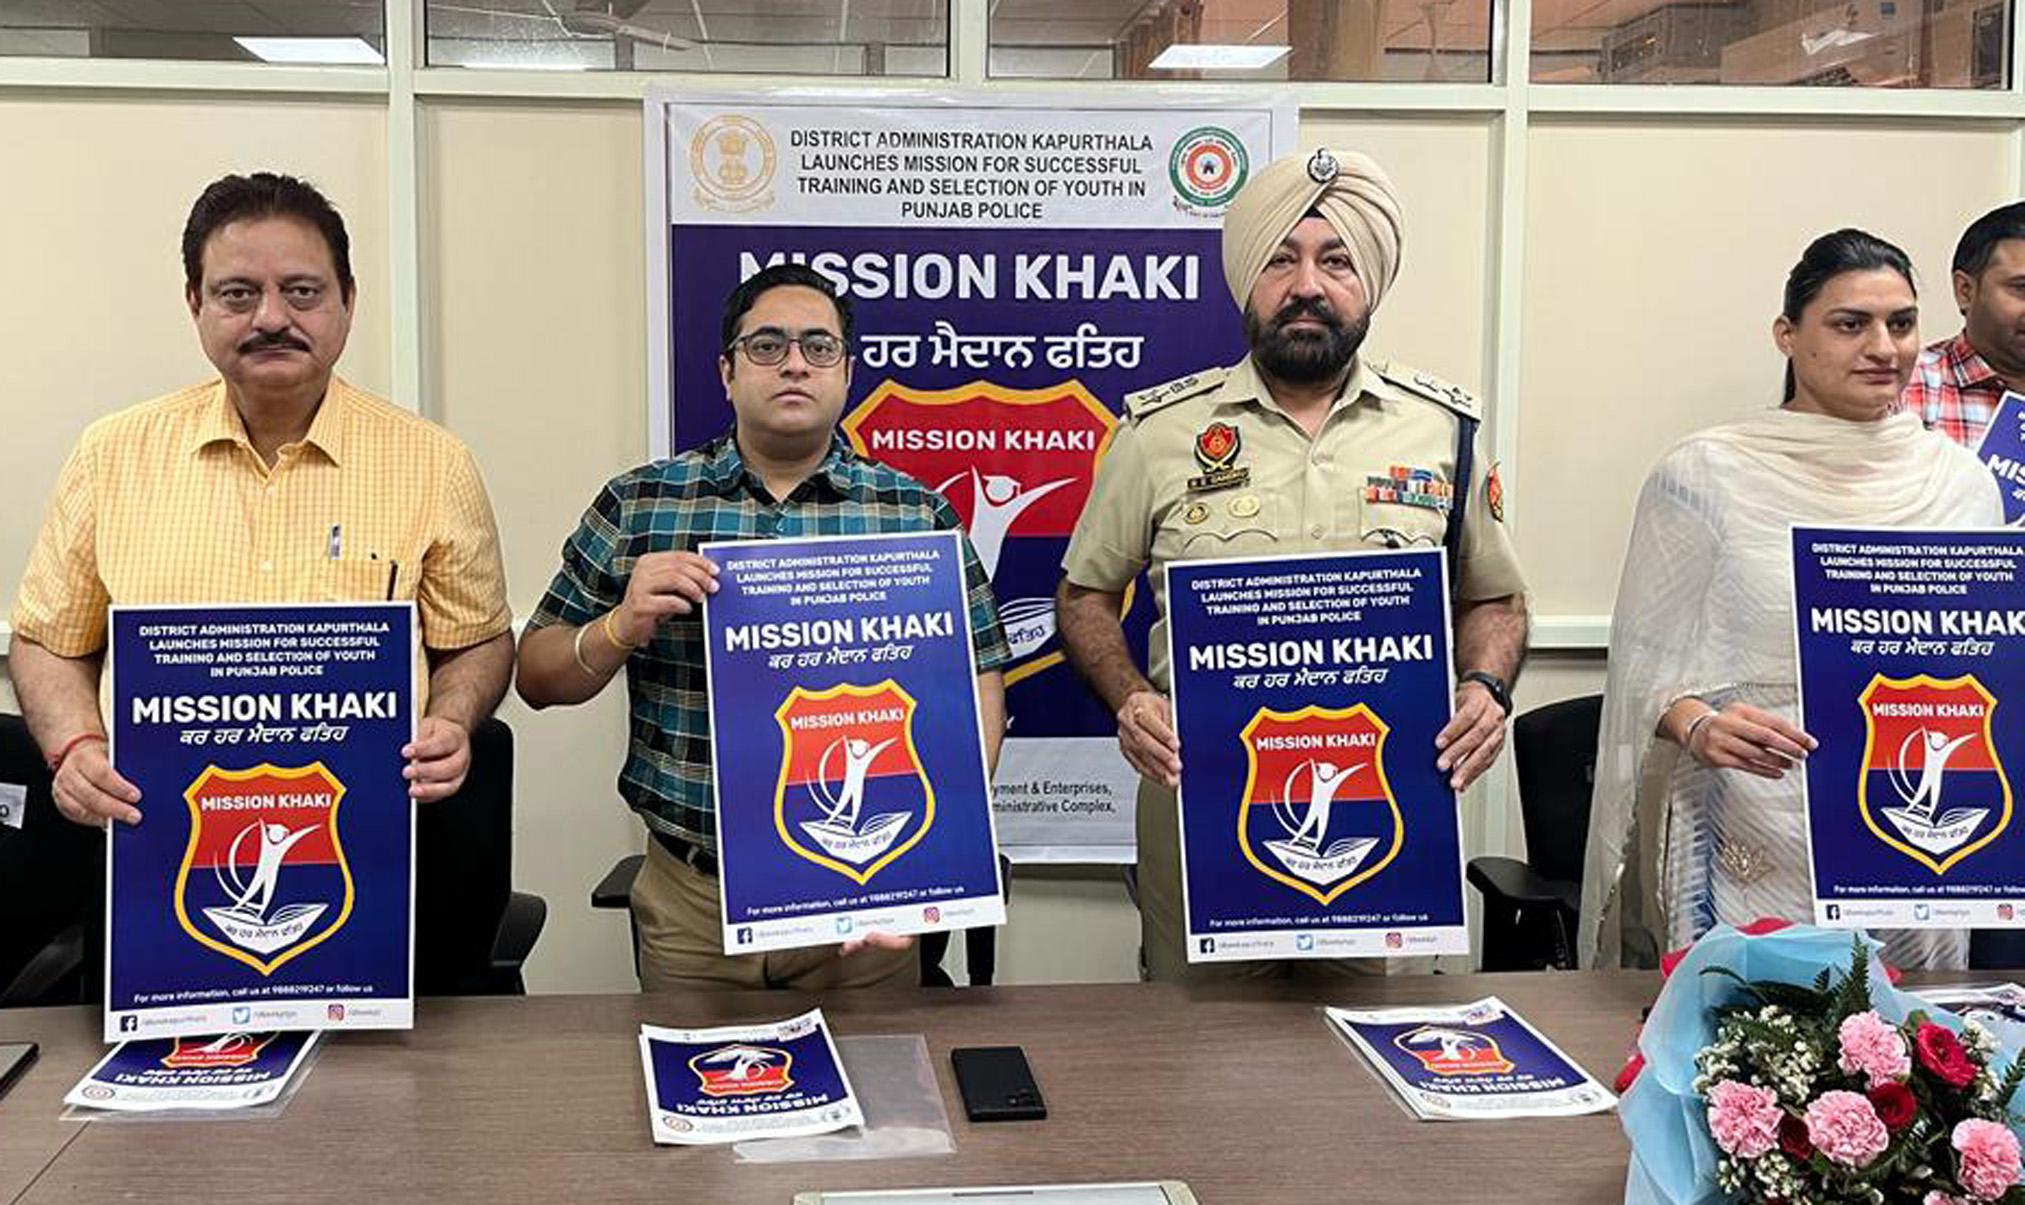 Kapurthala: 'Mission Khaki' to prepare youth for police recruitment